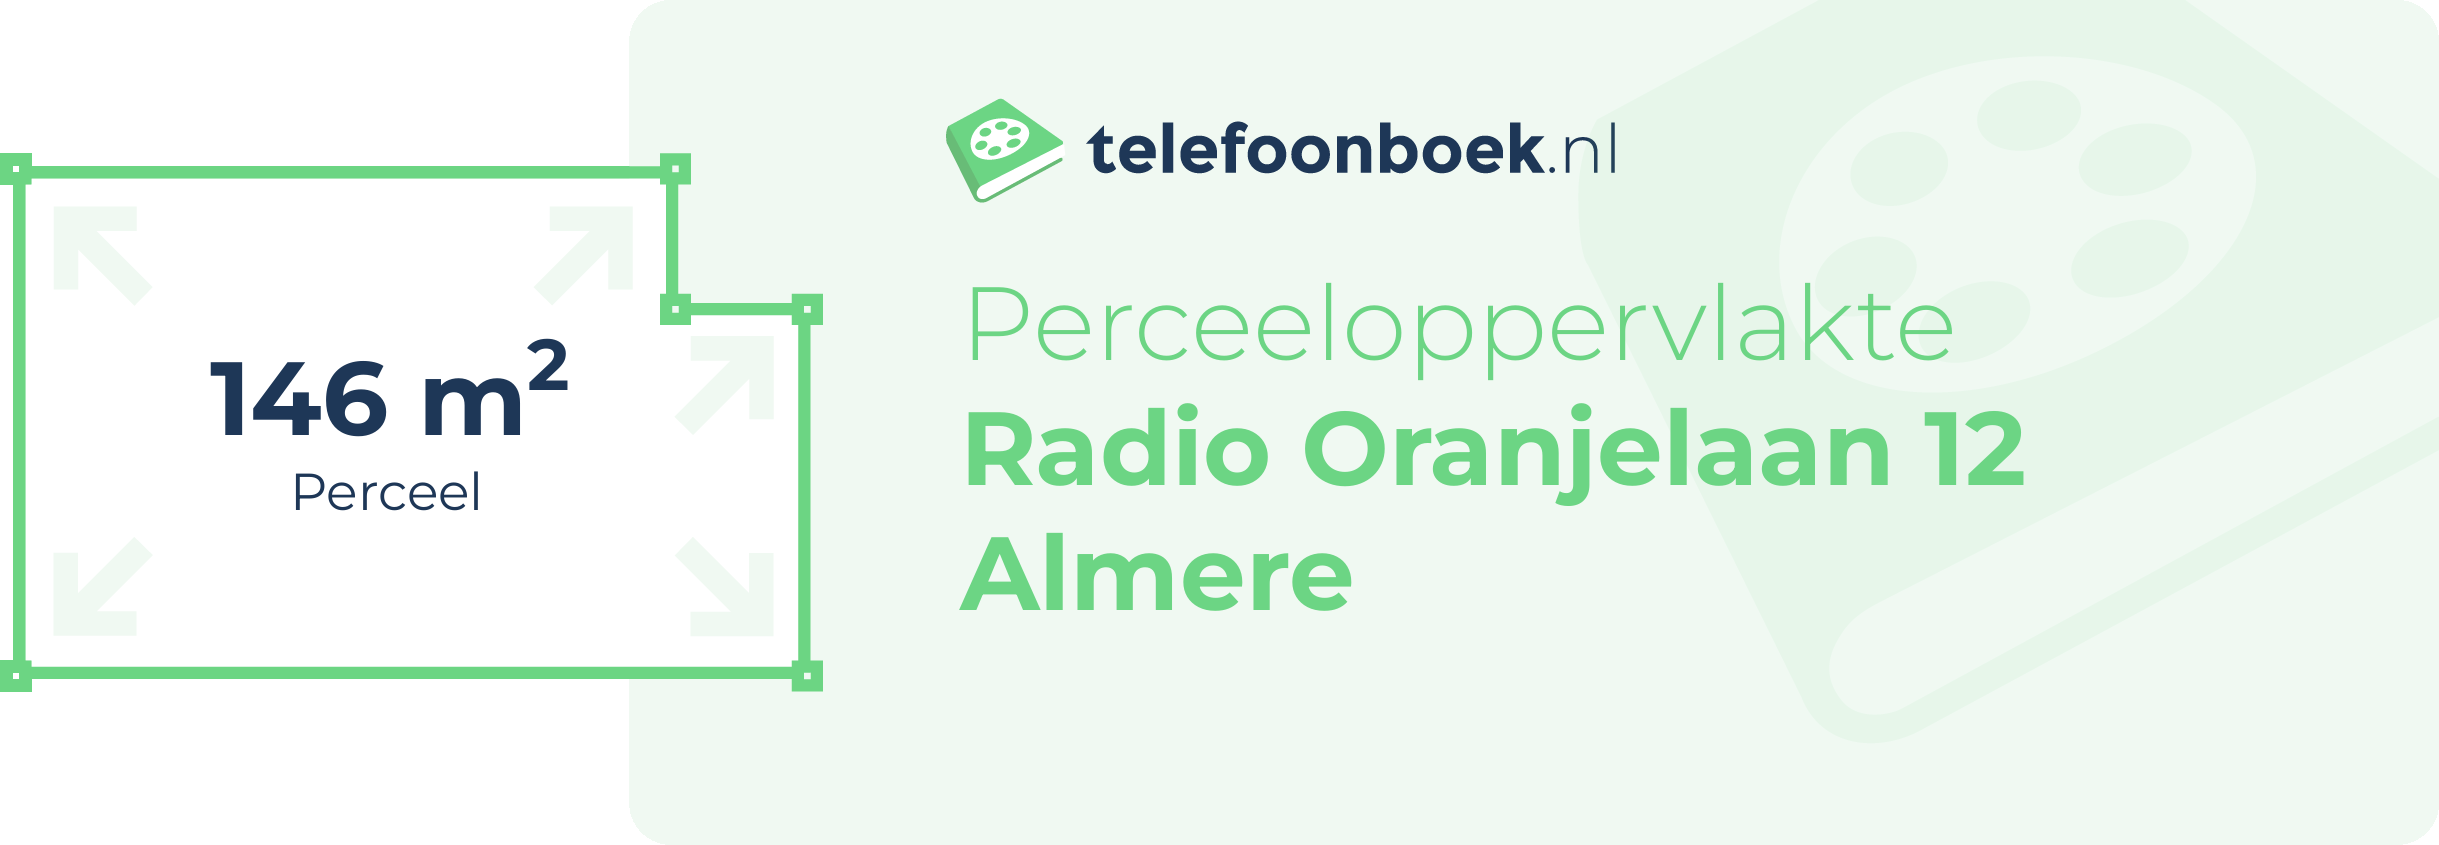 Perceeloppervlakte Radio Oranjelaan 12 Almere